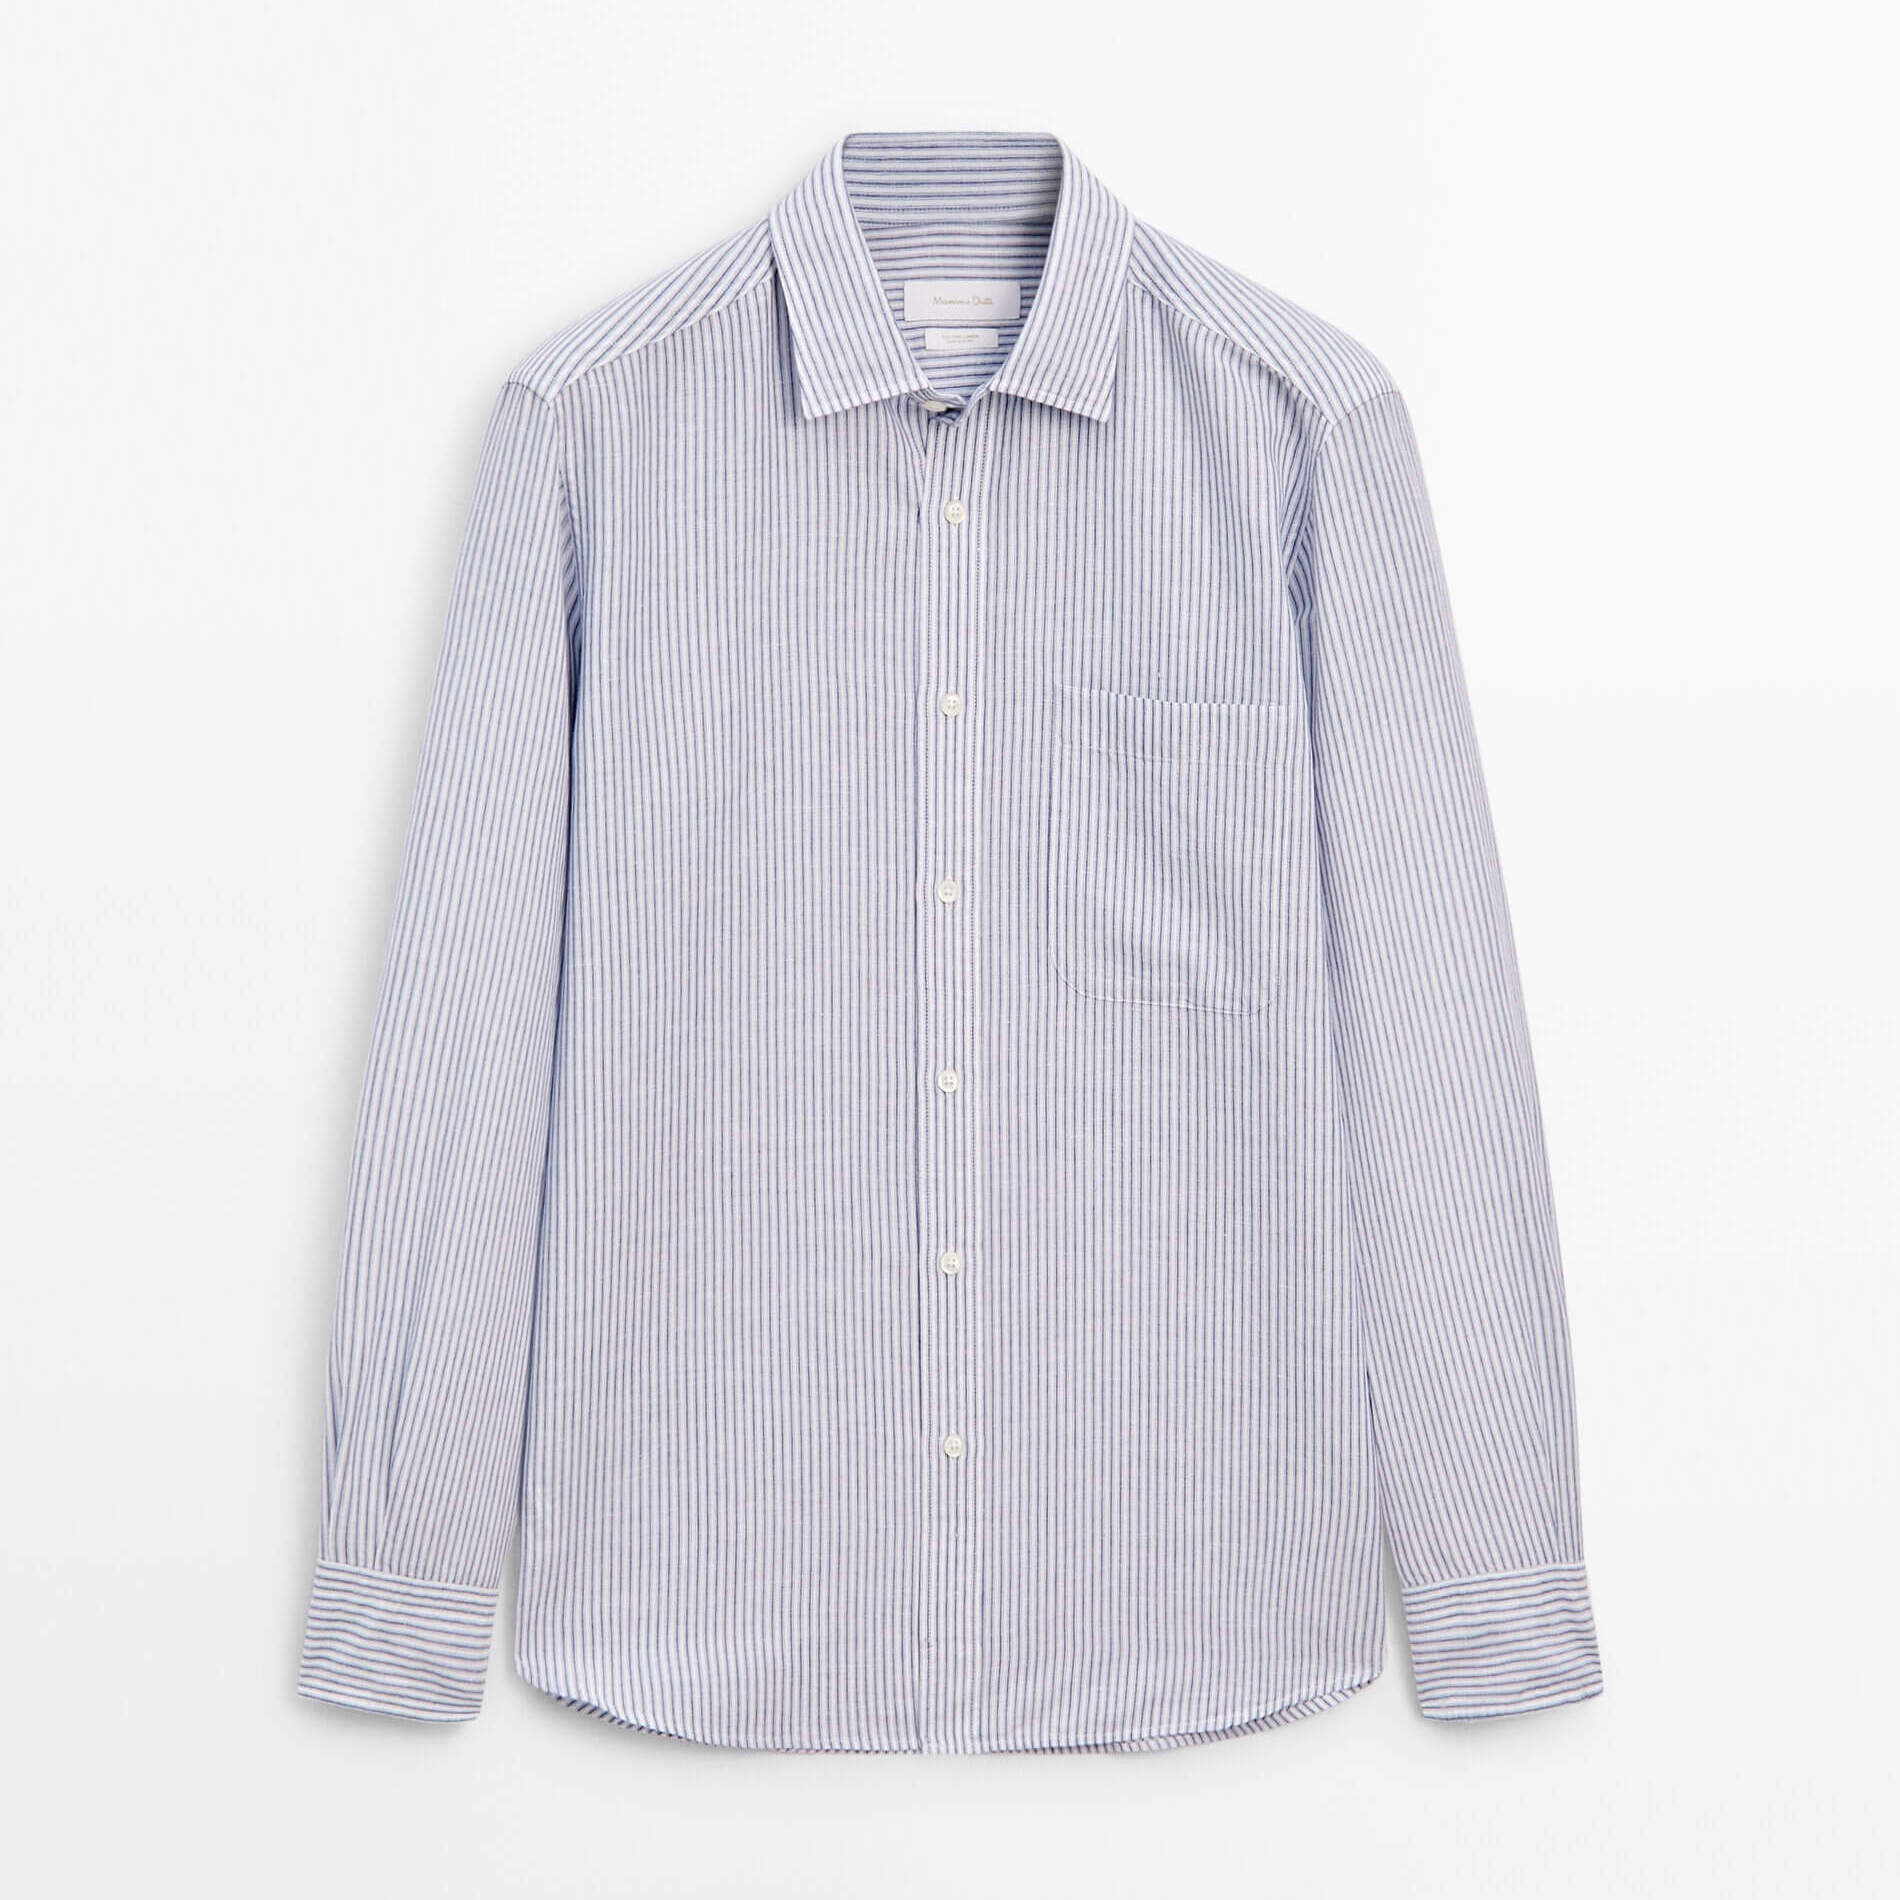 Рубашка Massimo Dutti Regular-Fit Striped 100% Linen, сиреневый/белый рубашка uniqlo 100% linen striped белый синий